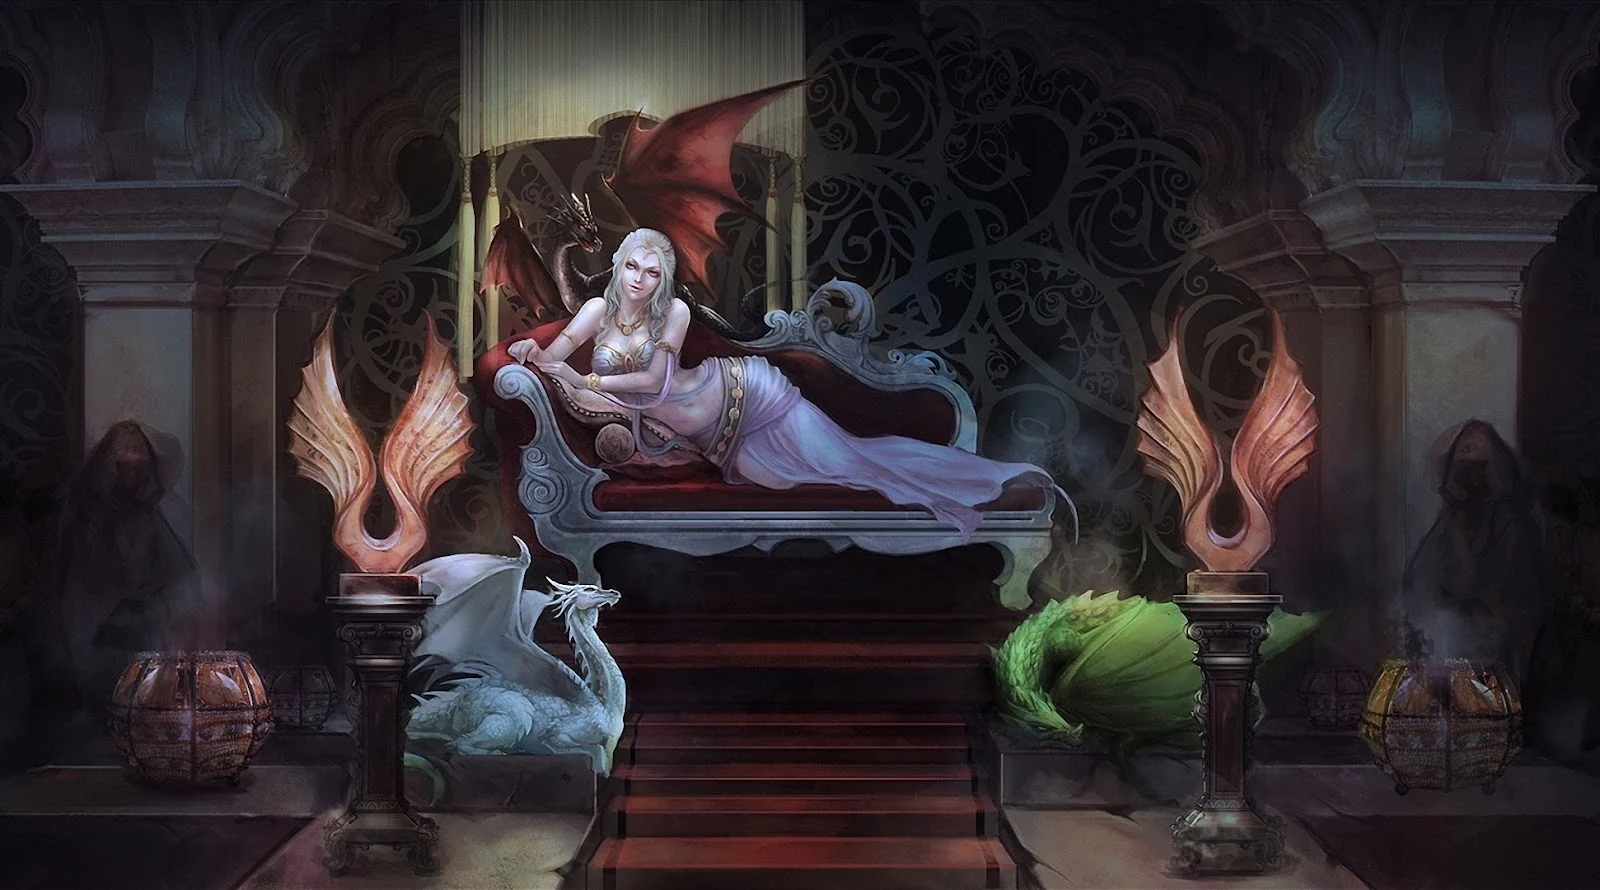 A portrayal of House Targaryen's legacy, featuring dragons and the iconic Targaryen sigil